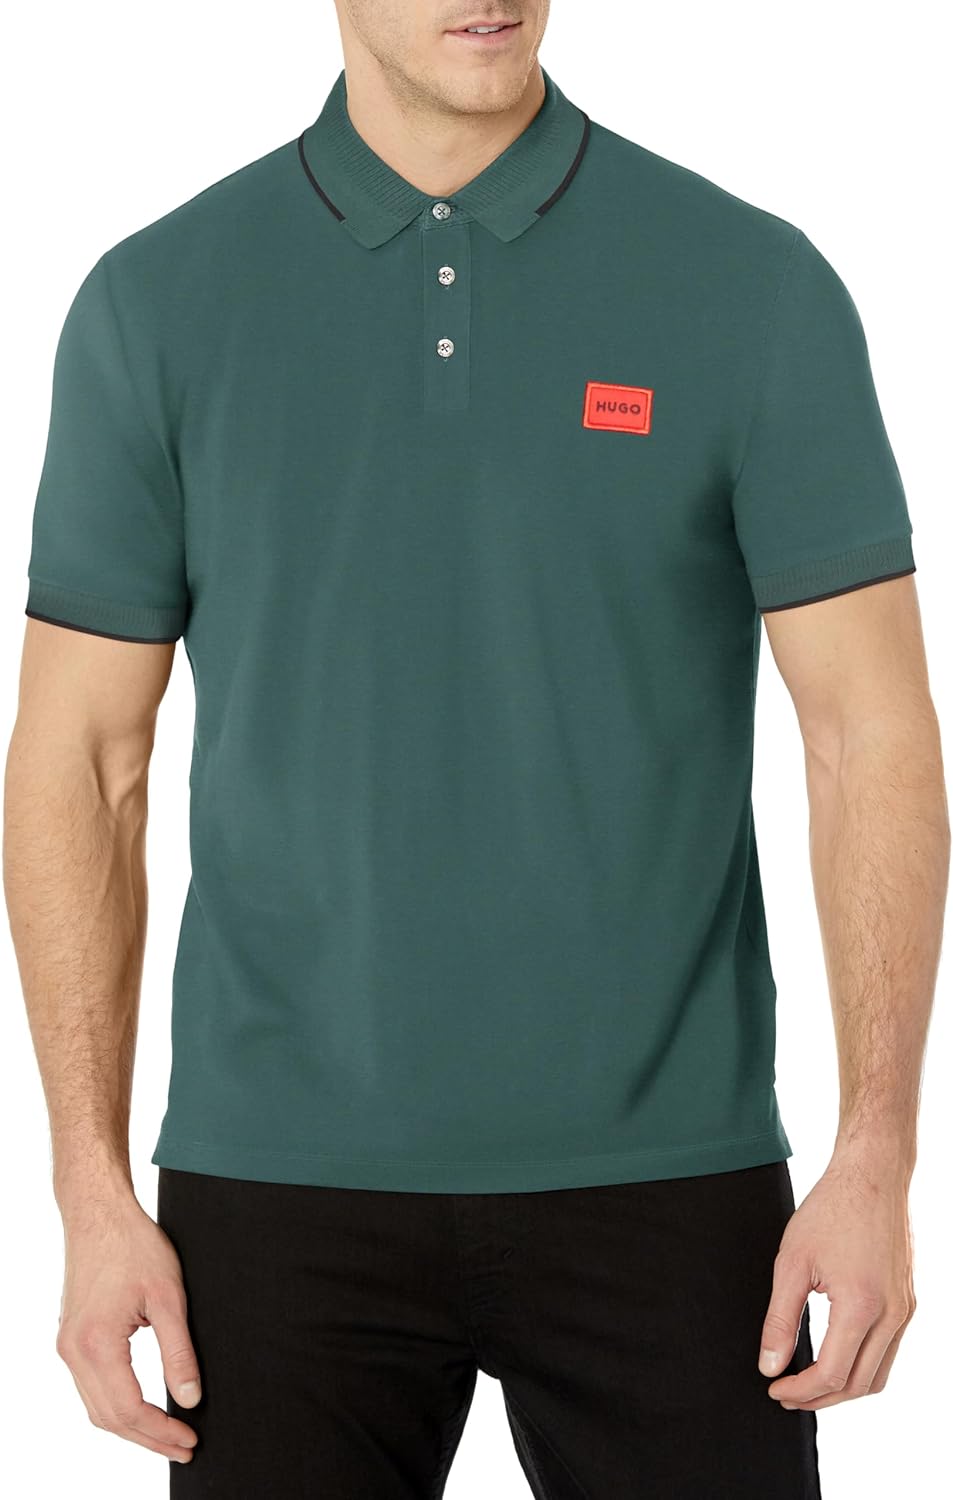 Shop Hugo Boss Hugo Men's Solid Green Square Logo Cotton Short Sleeve Polo T-shirt